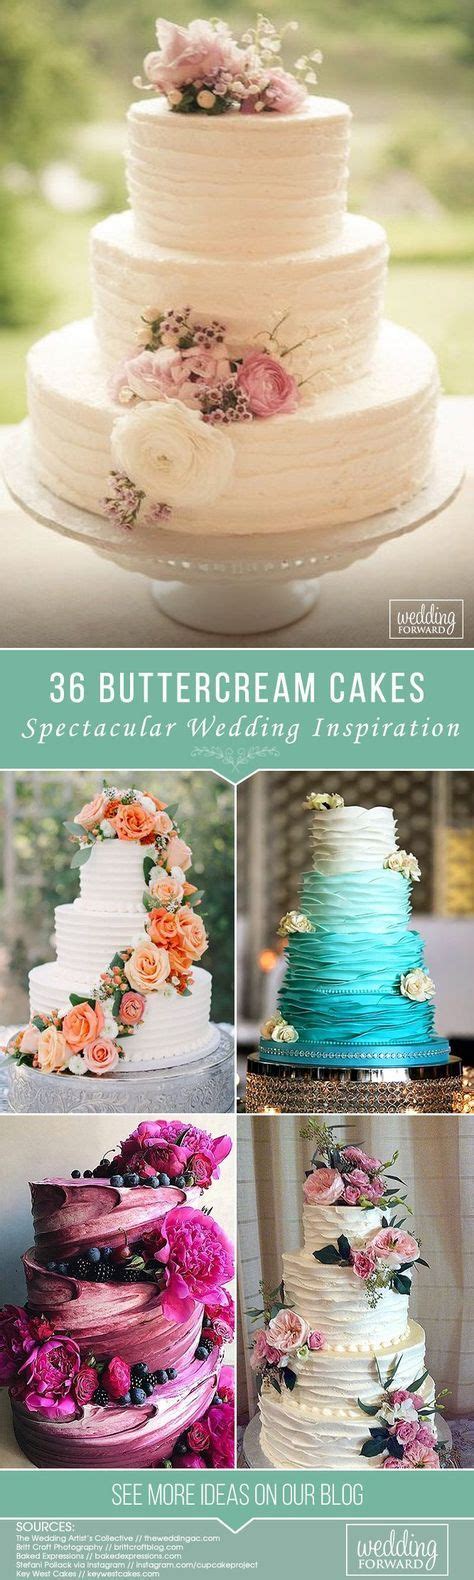 42 Spectacular Buttercream Wedding Cakes With Images Wedding Cake